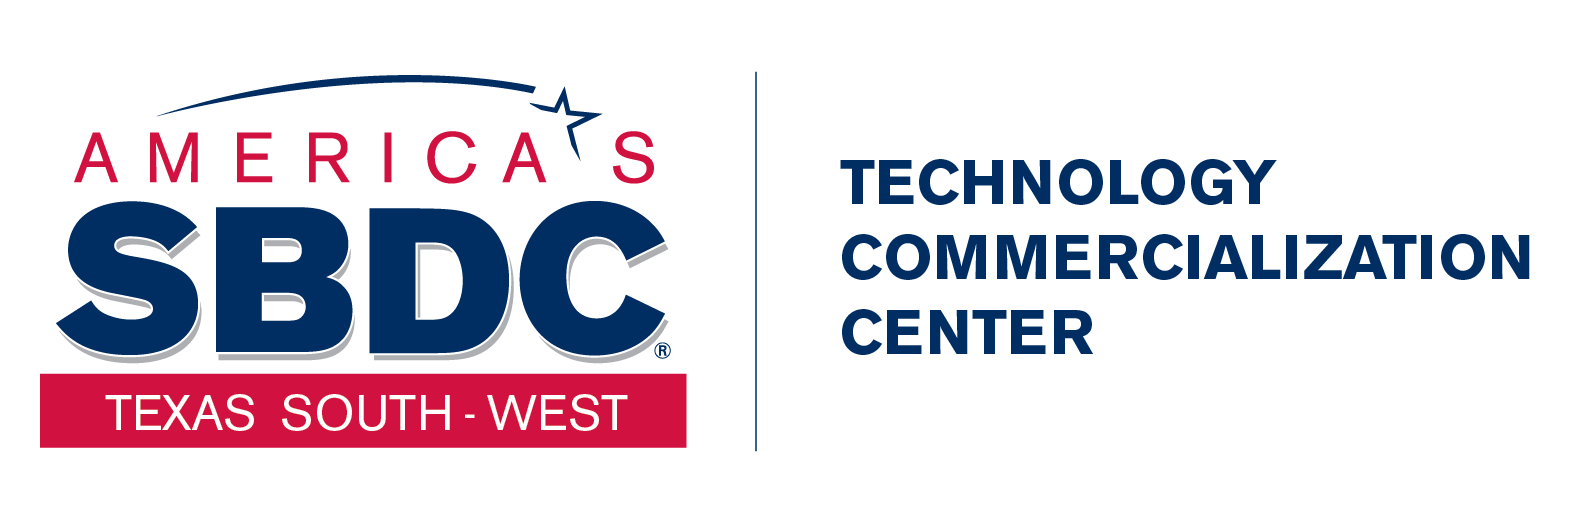 UTSA SBDC Technology Commercialization Center